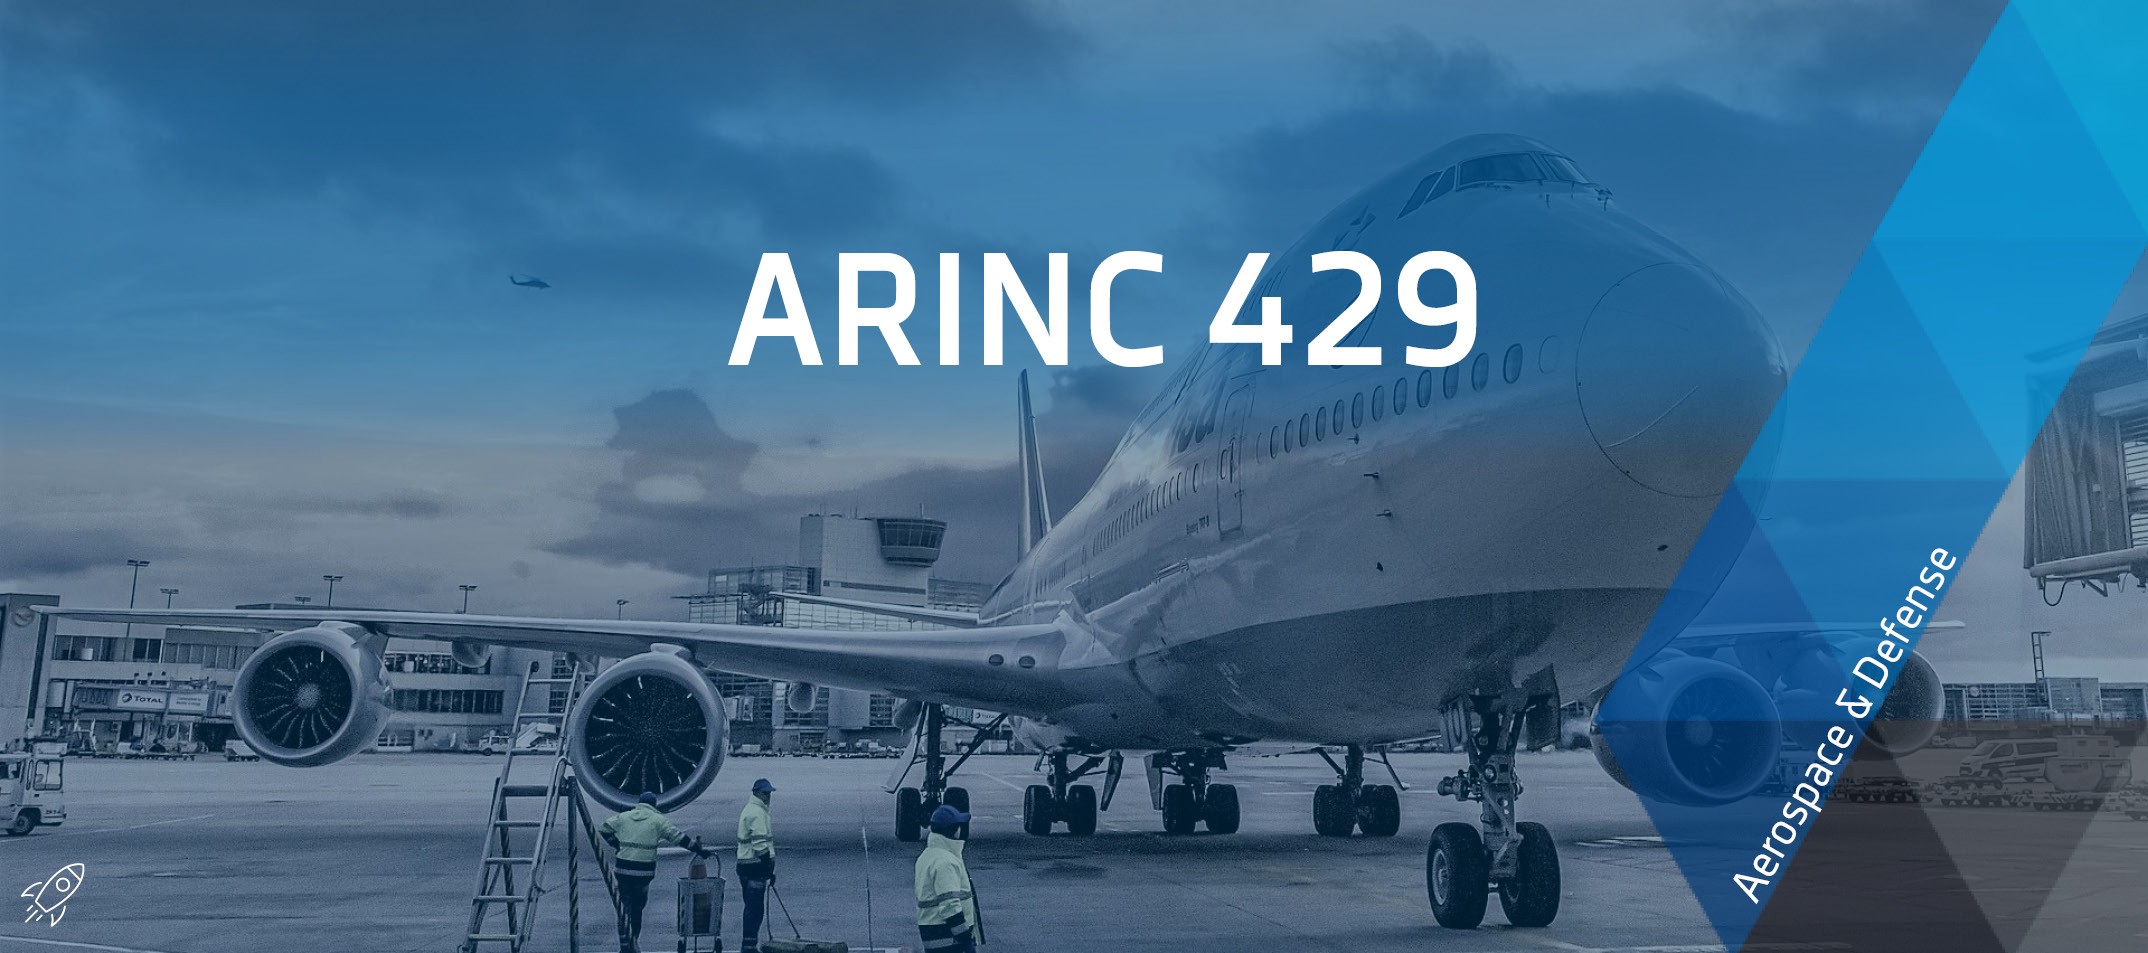 ARINC 429 Avionic Standard